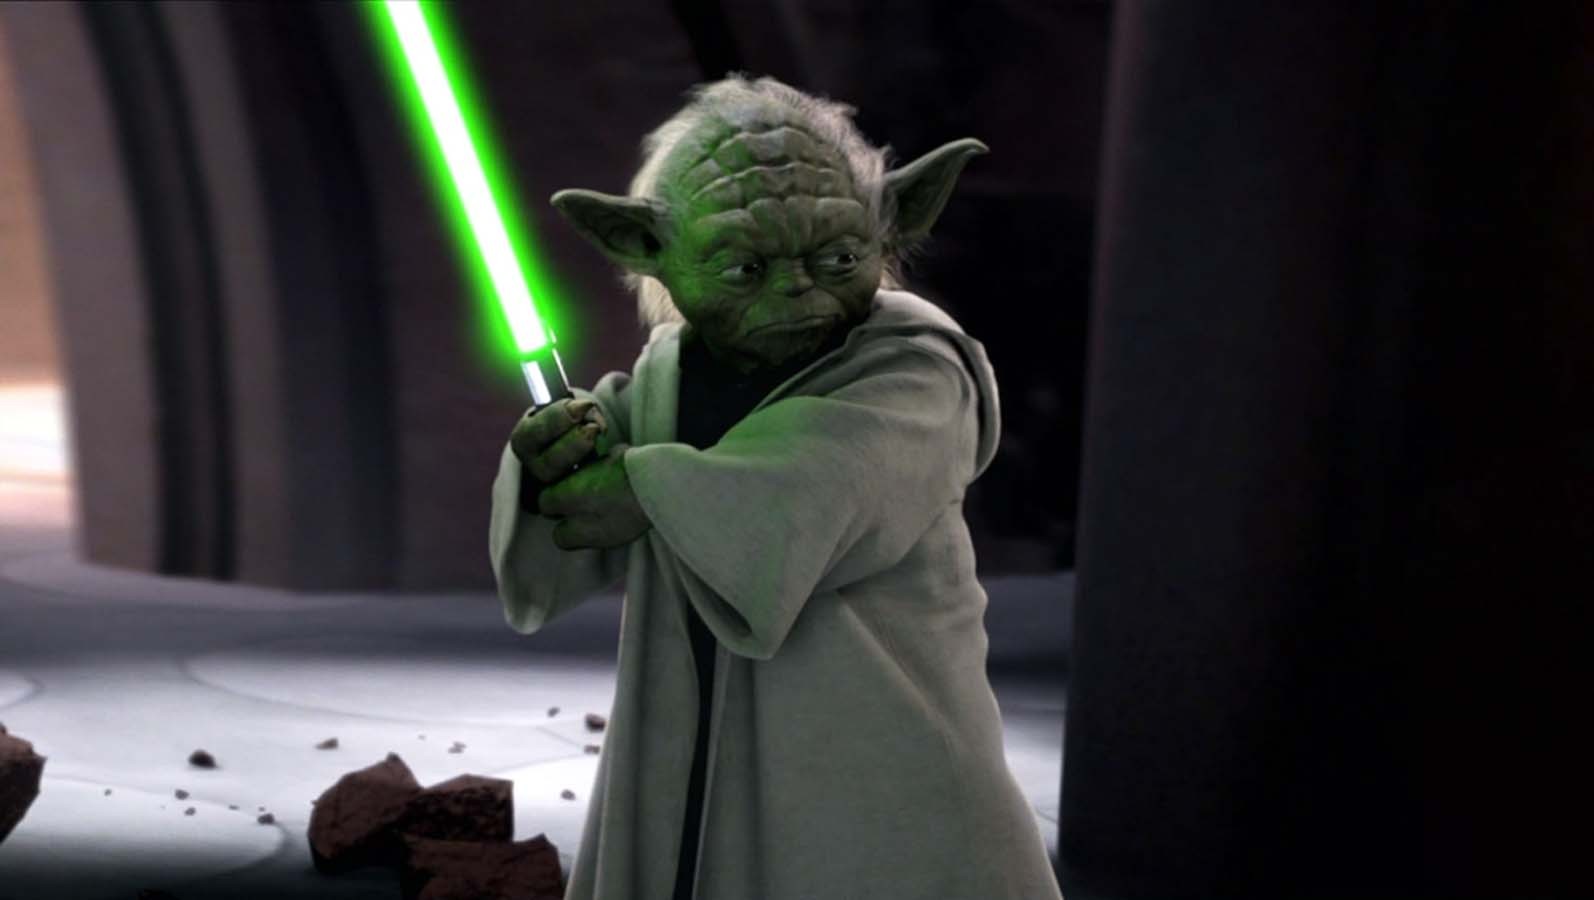 Star Wars Yoda Jedi Star Wars Episode Ii Attack Of The Clones Lightsaber 1594x900